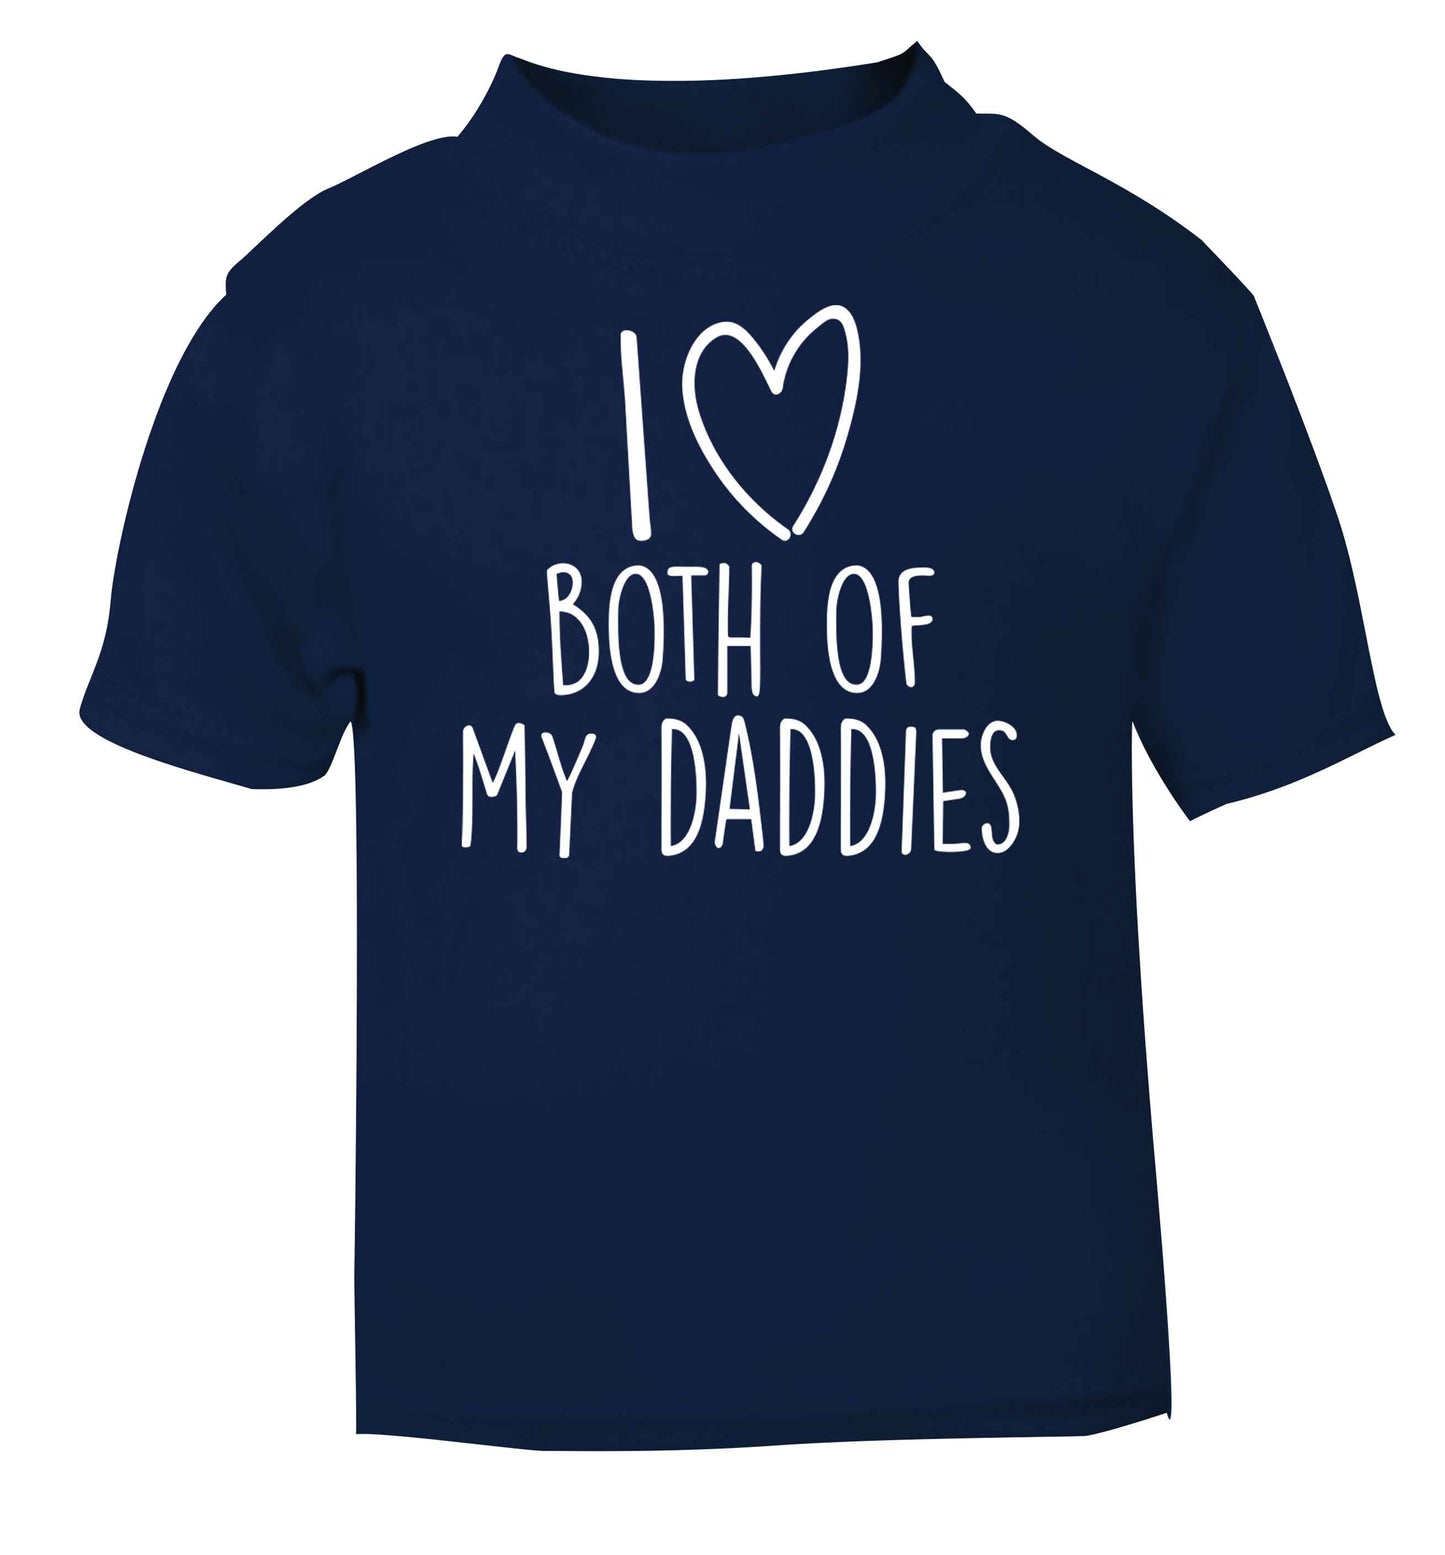 I love both of my daddies navy baby toddler Tshirt 2 Years